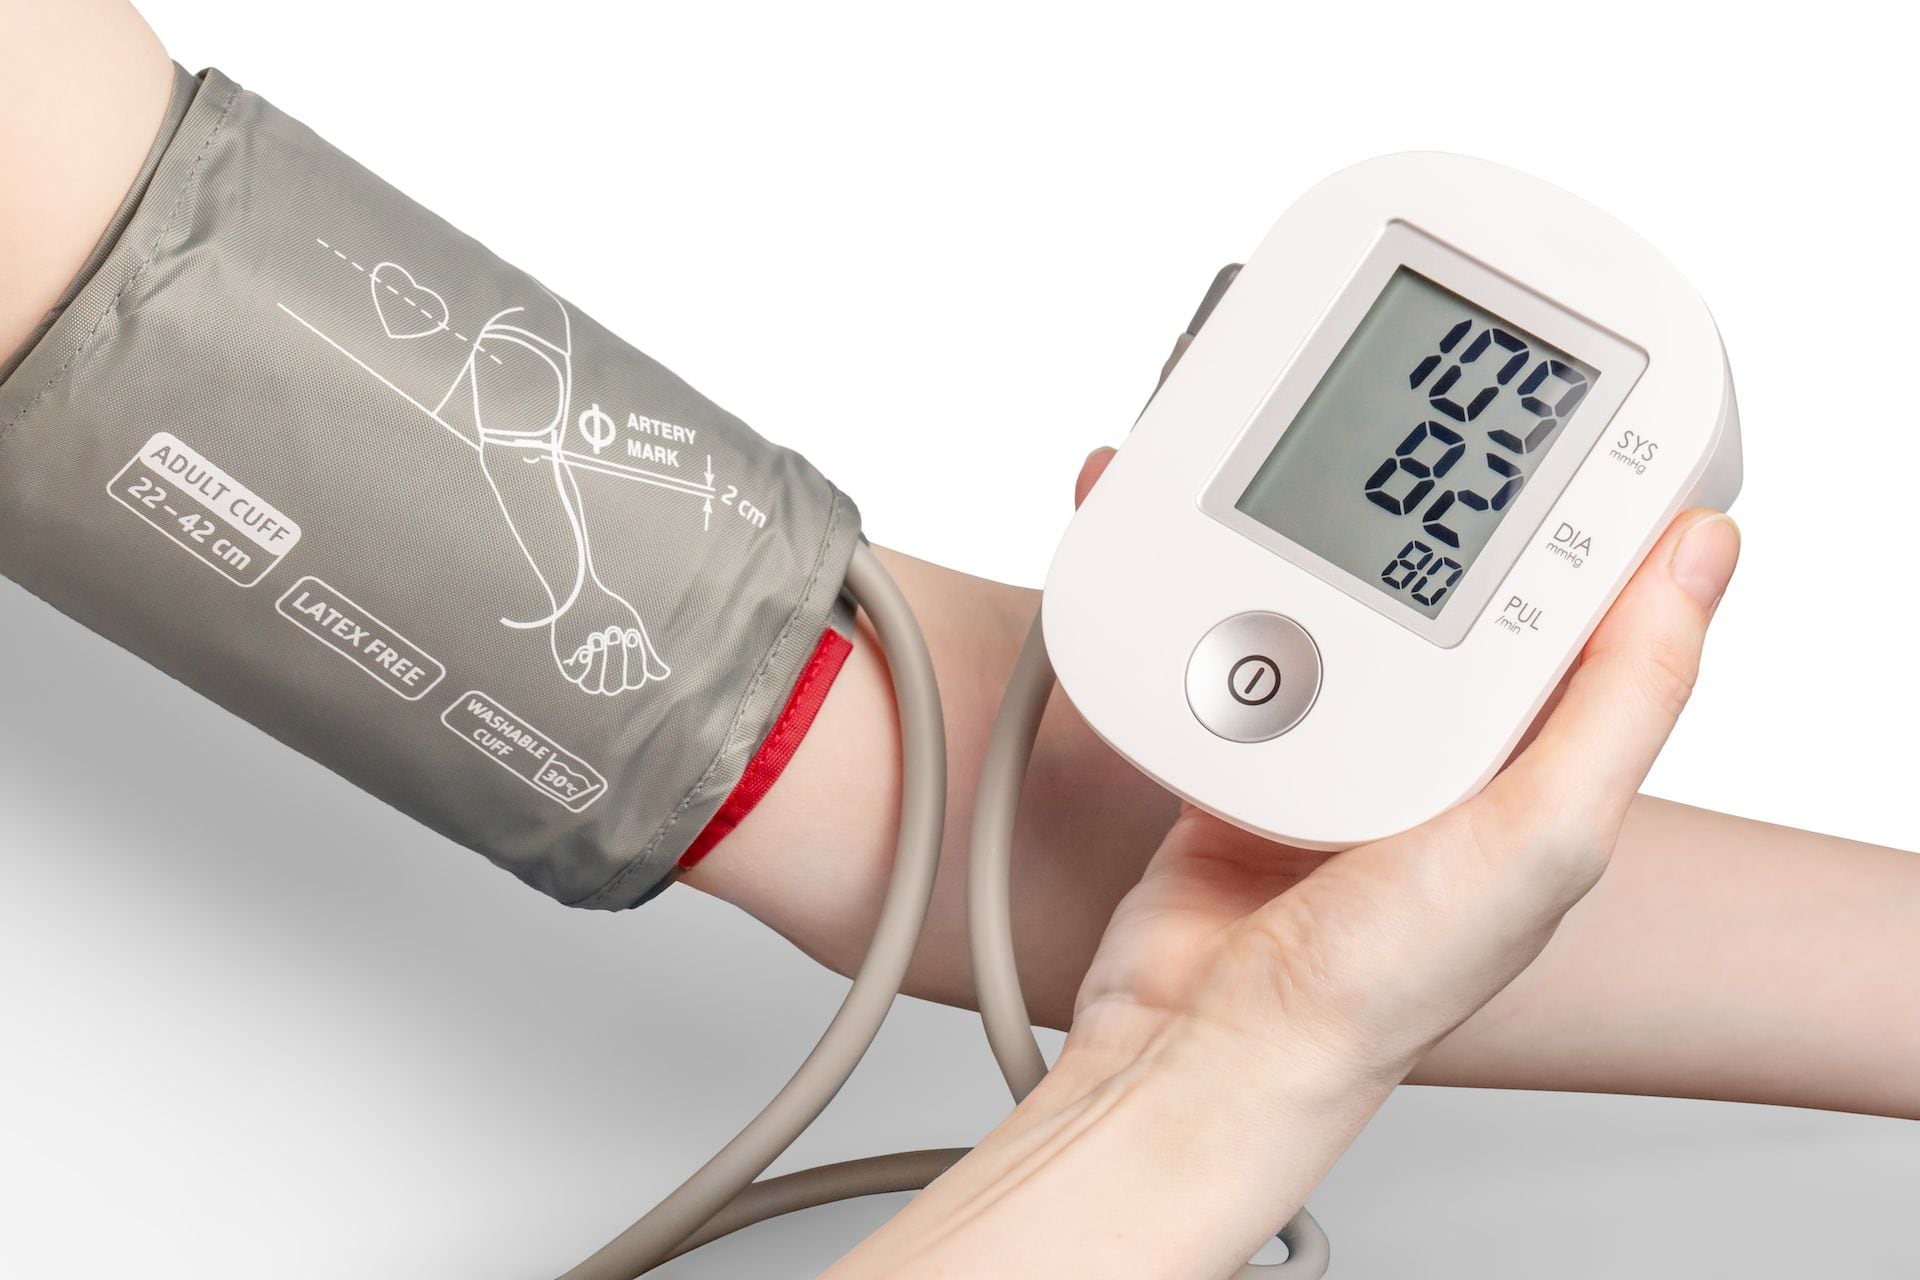 Medidor Presion Arterial Tensiometro Digital Maquina Para Medir Aparato  Muneca